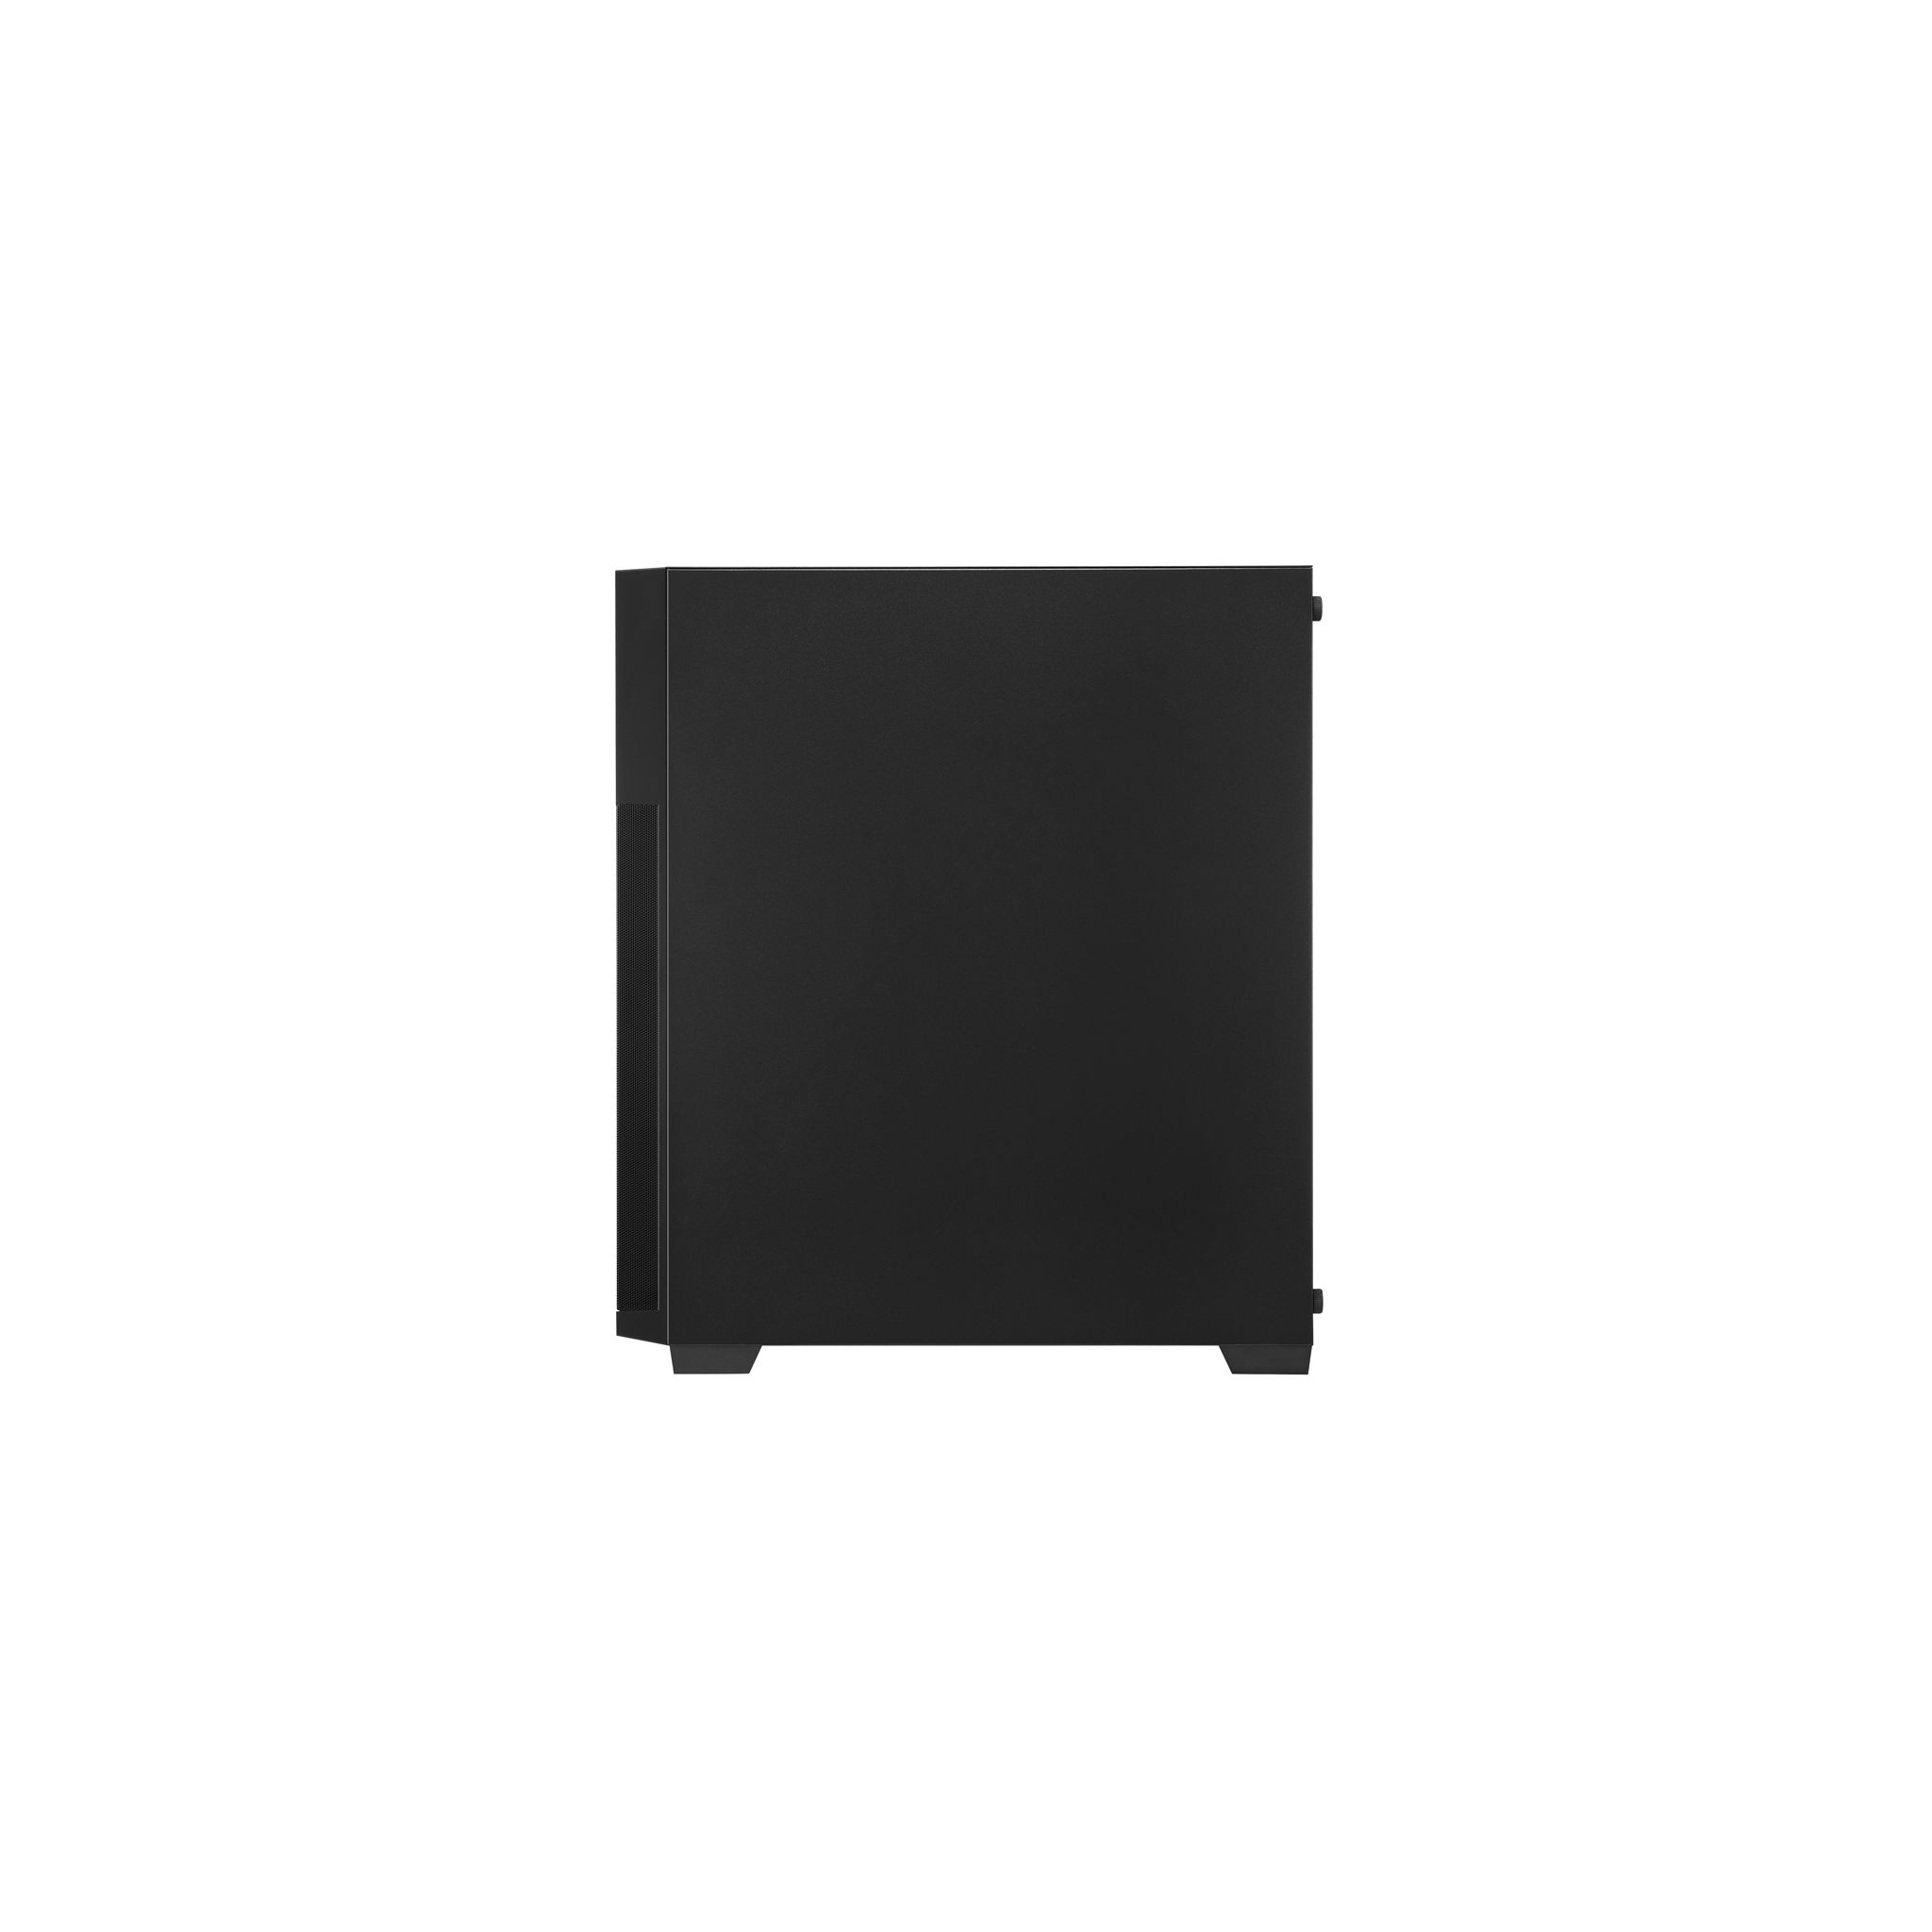 SHARKOON schwarz PC RGB FLOW Gehäuse,